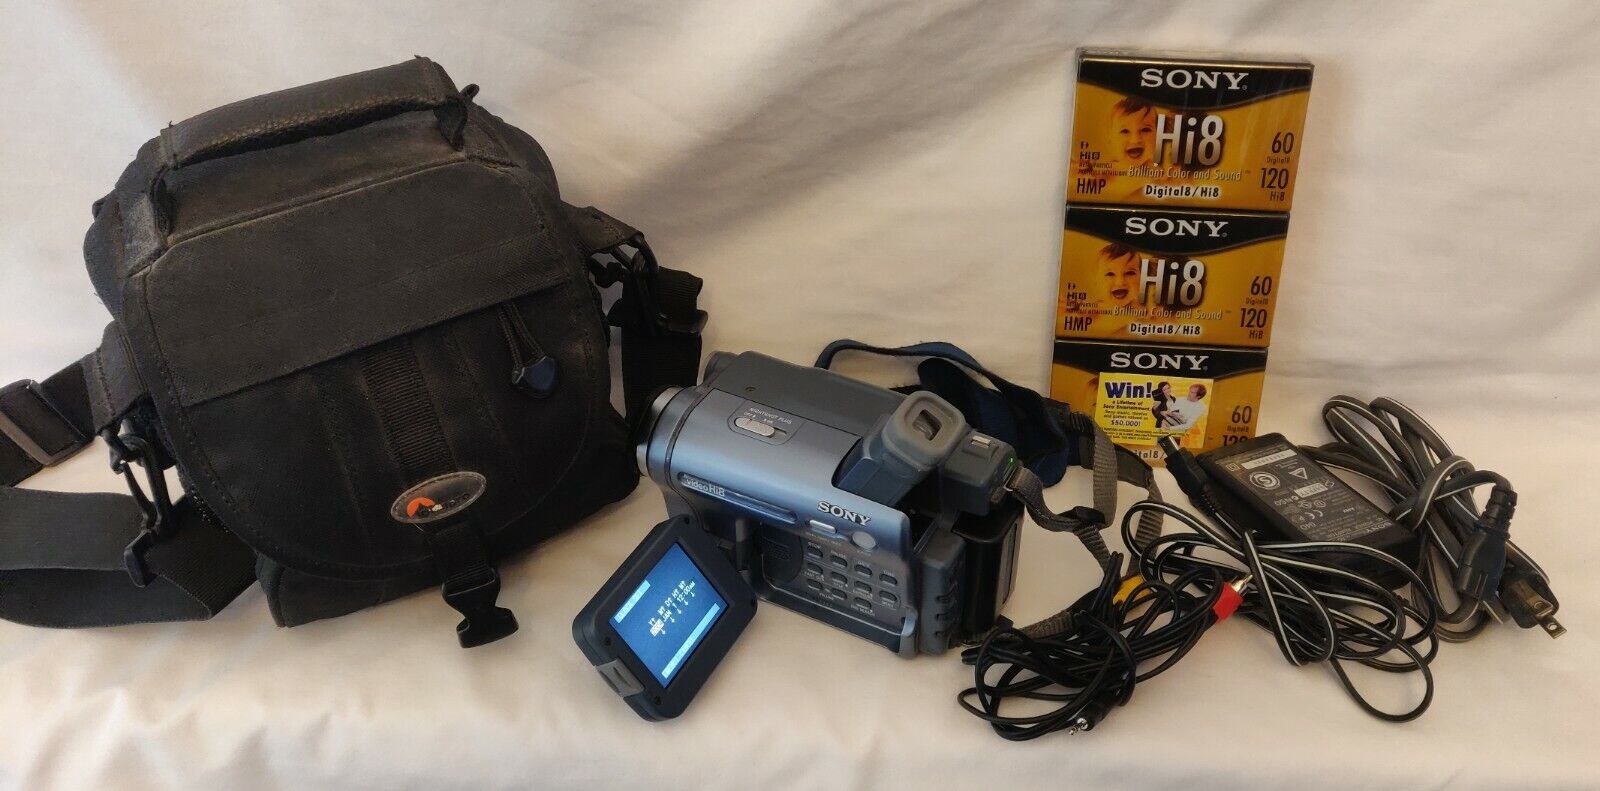 Sony Handycam CCD-TRV128 Camcorder, Storage Bag, 3 Tapes